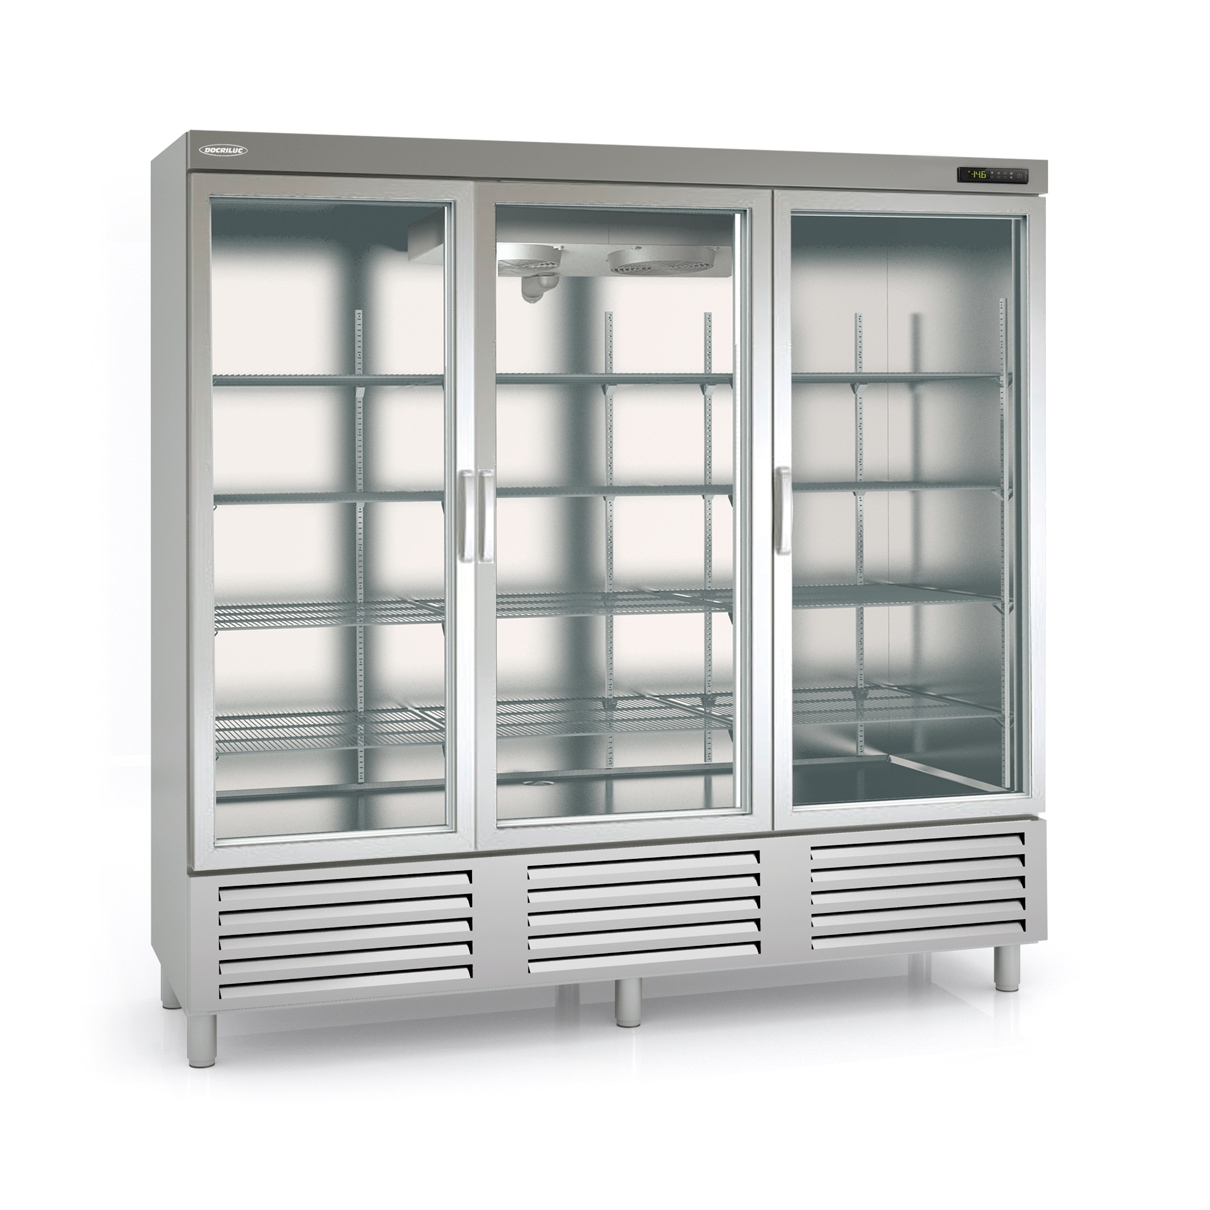 Snack Refrigerated Cabinet ARSV-210-3